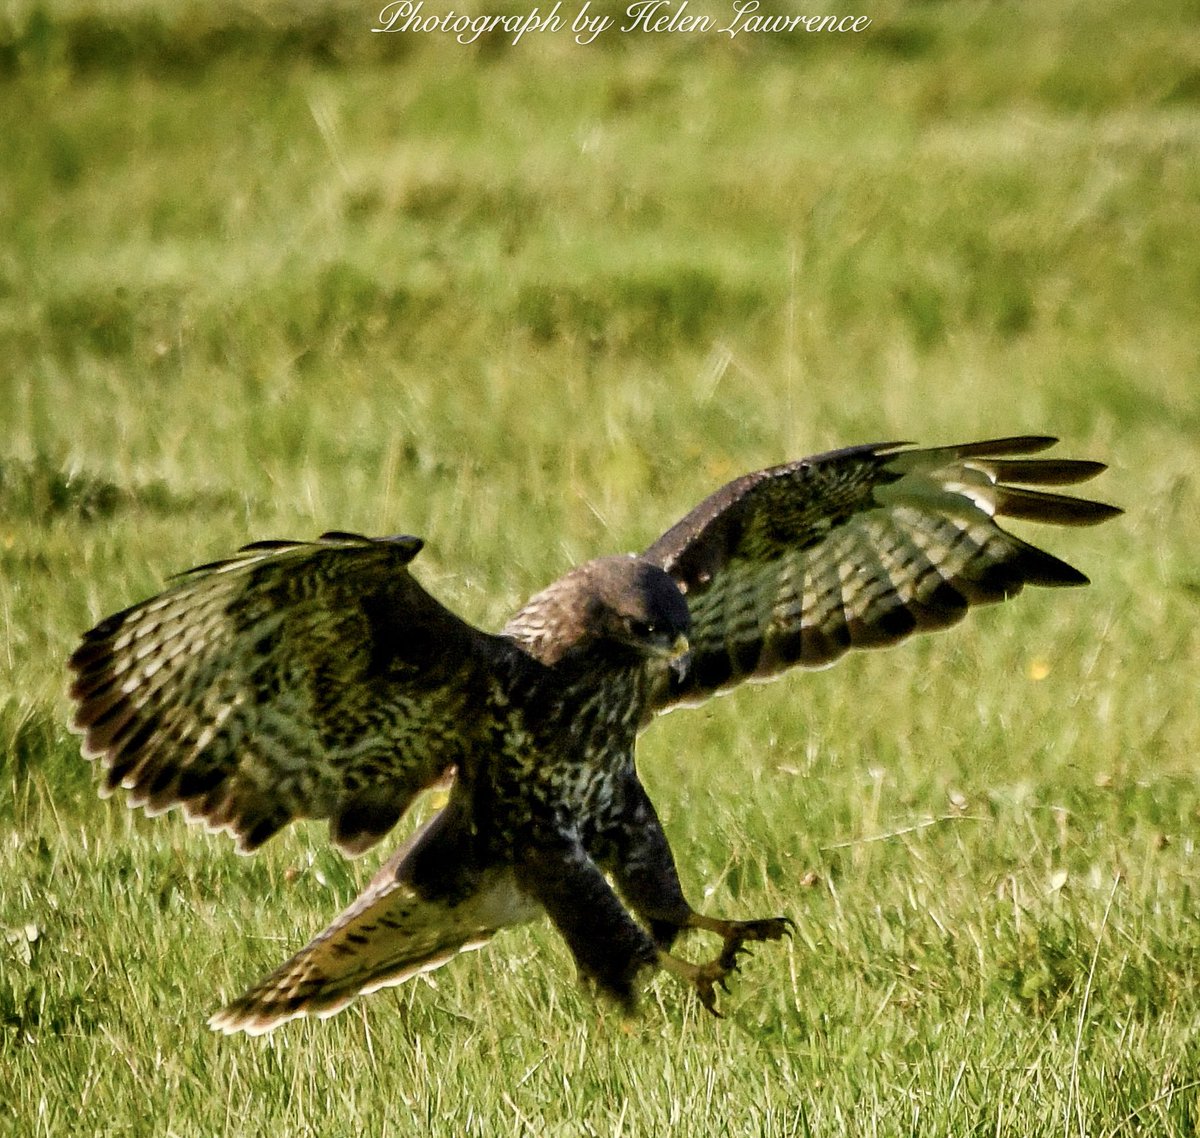 I’m coming to get you… #Buzzard #Commonbuzzard #birds #BirdsSeenIn2021 #birdphotography #birdwatching #BirdsOfPrey #Scotland #Tay